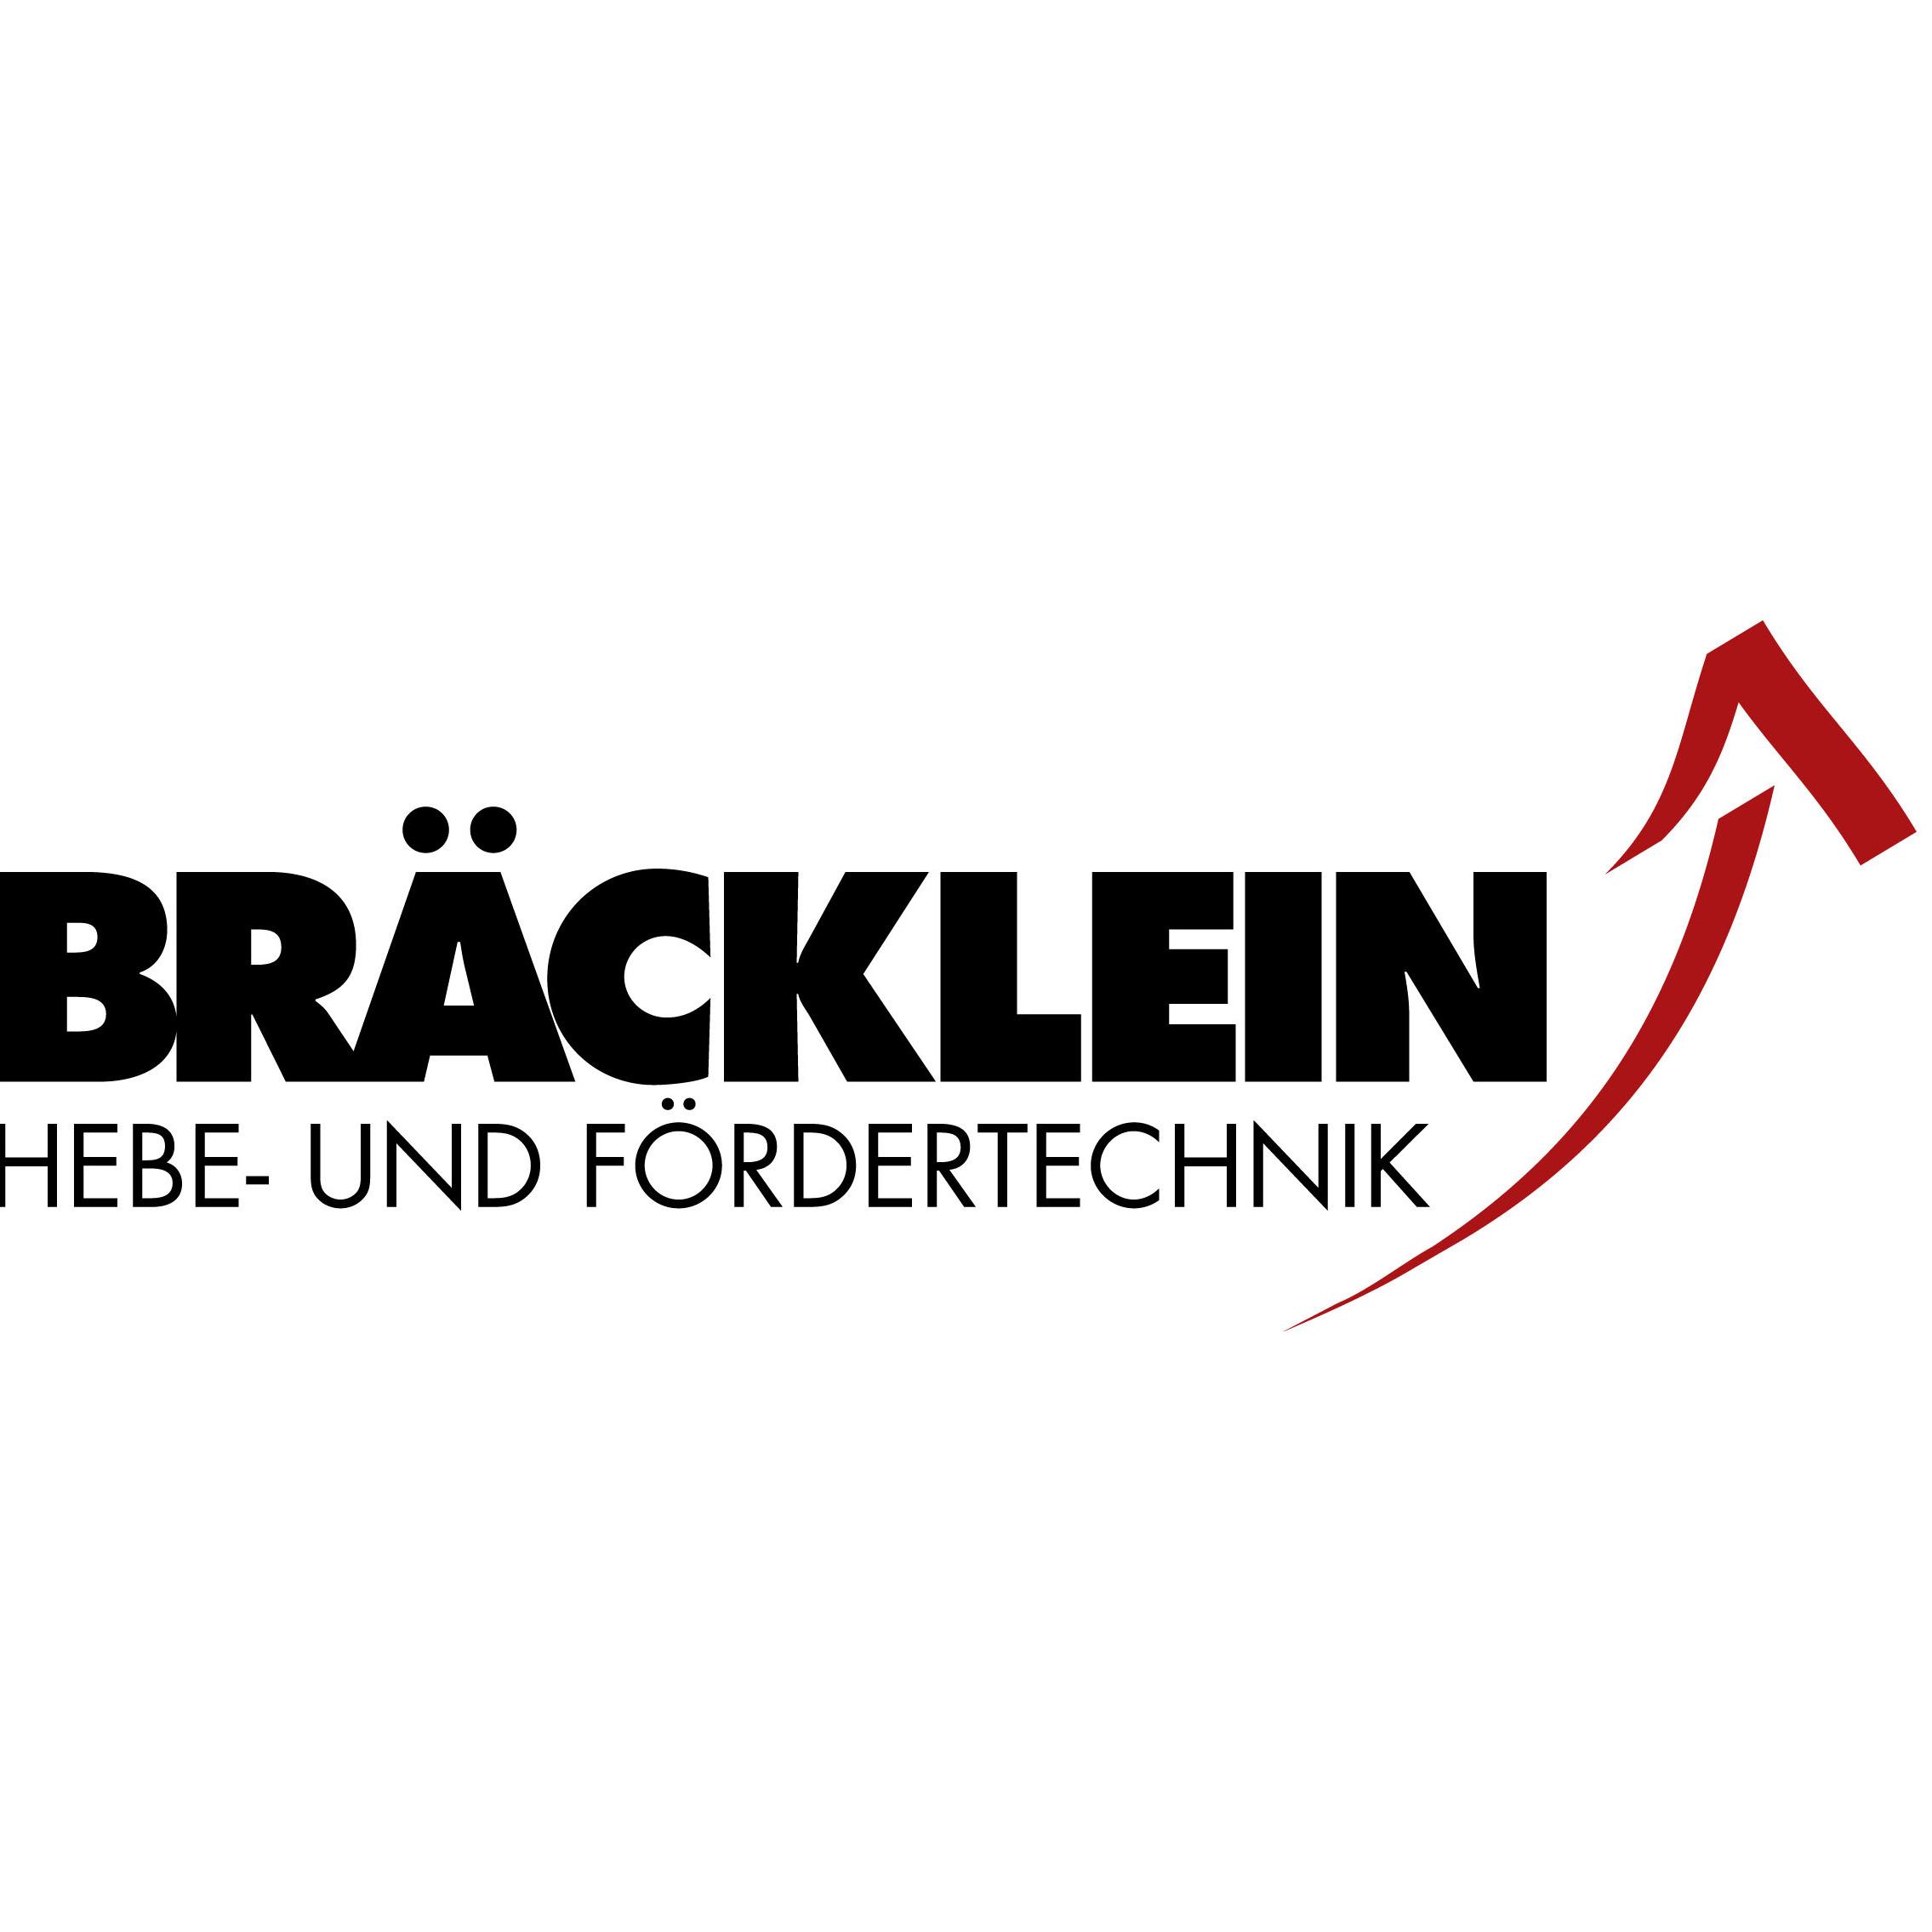 Thomas Bräcklein Hebe- und Fördertechnik Logo